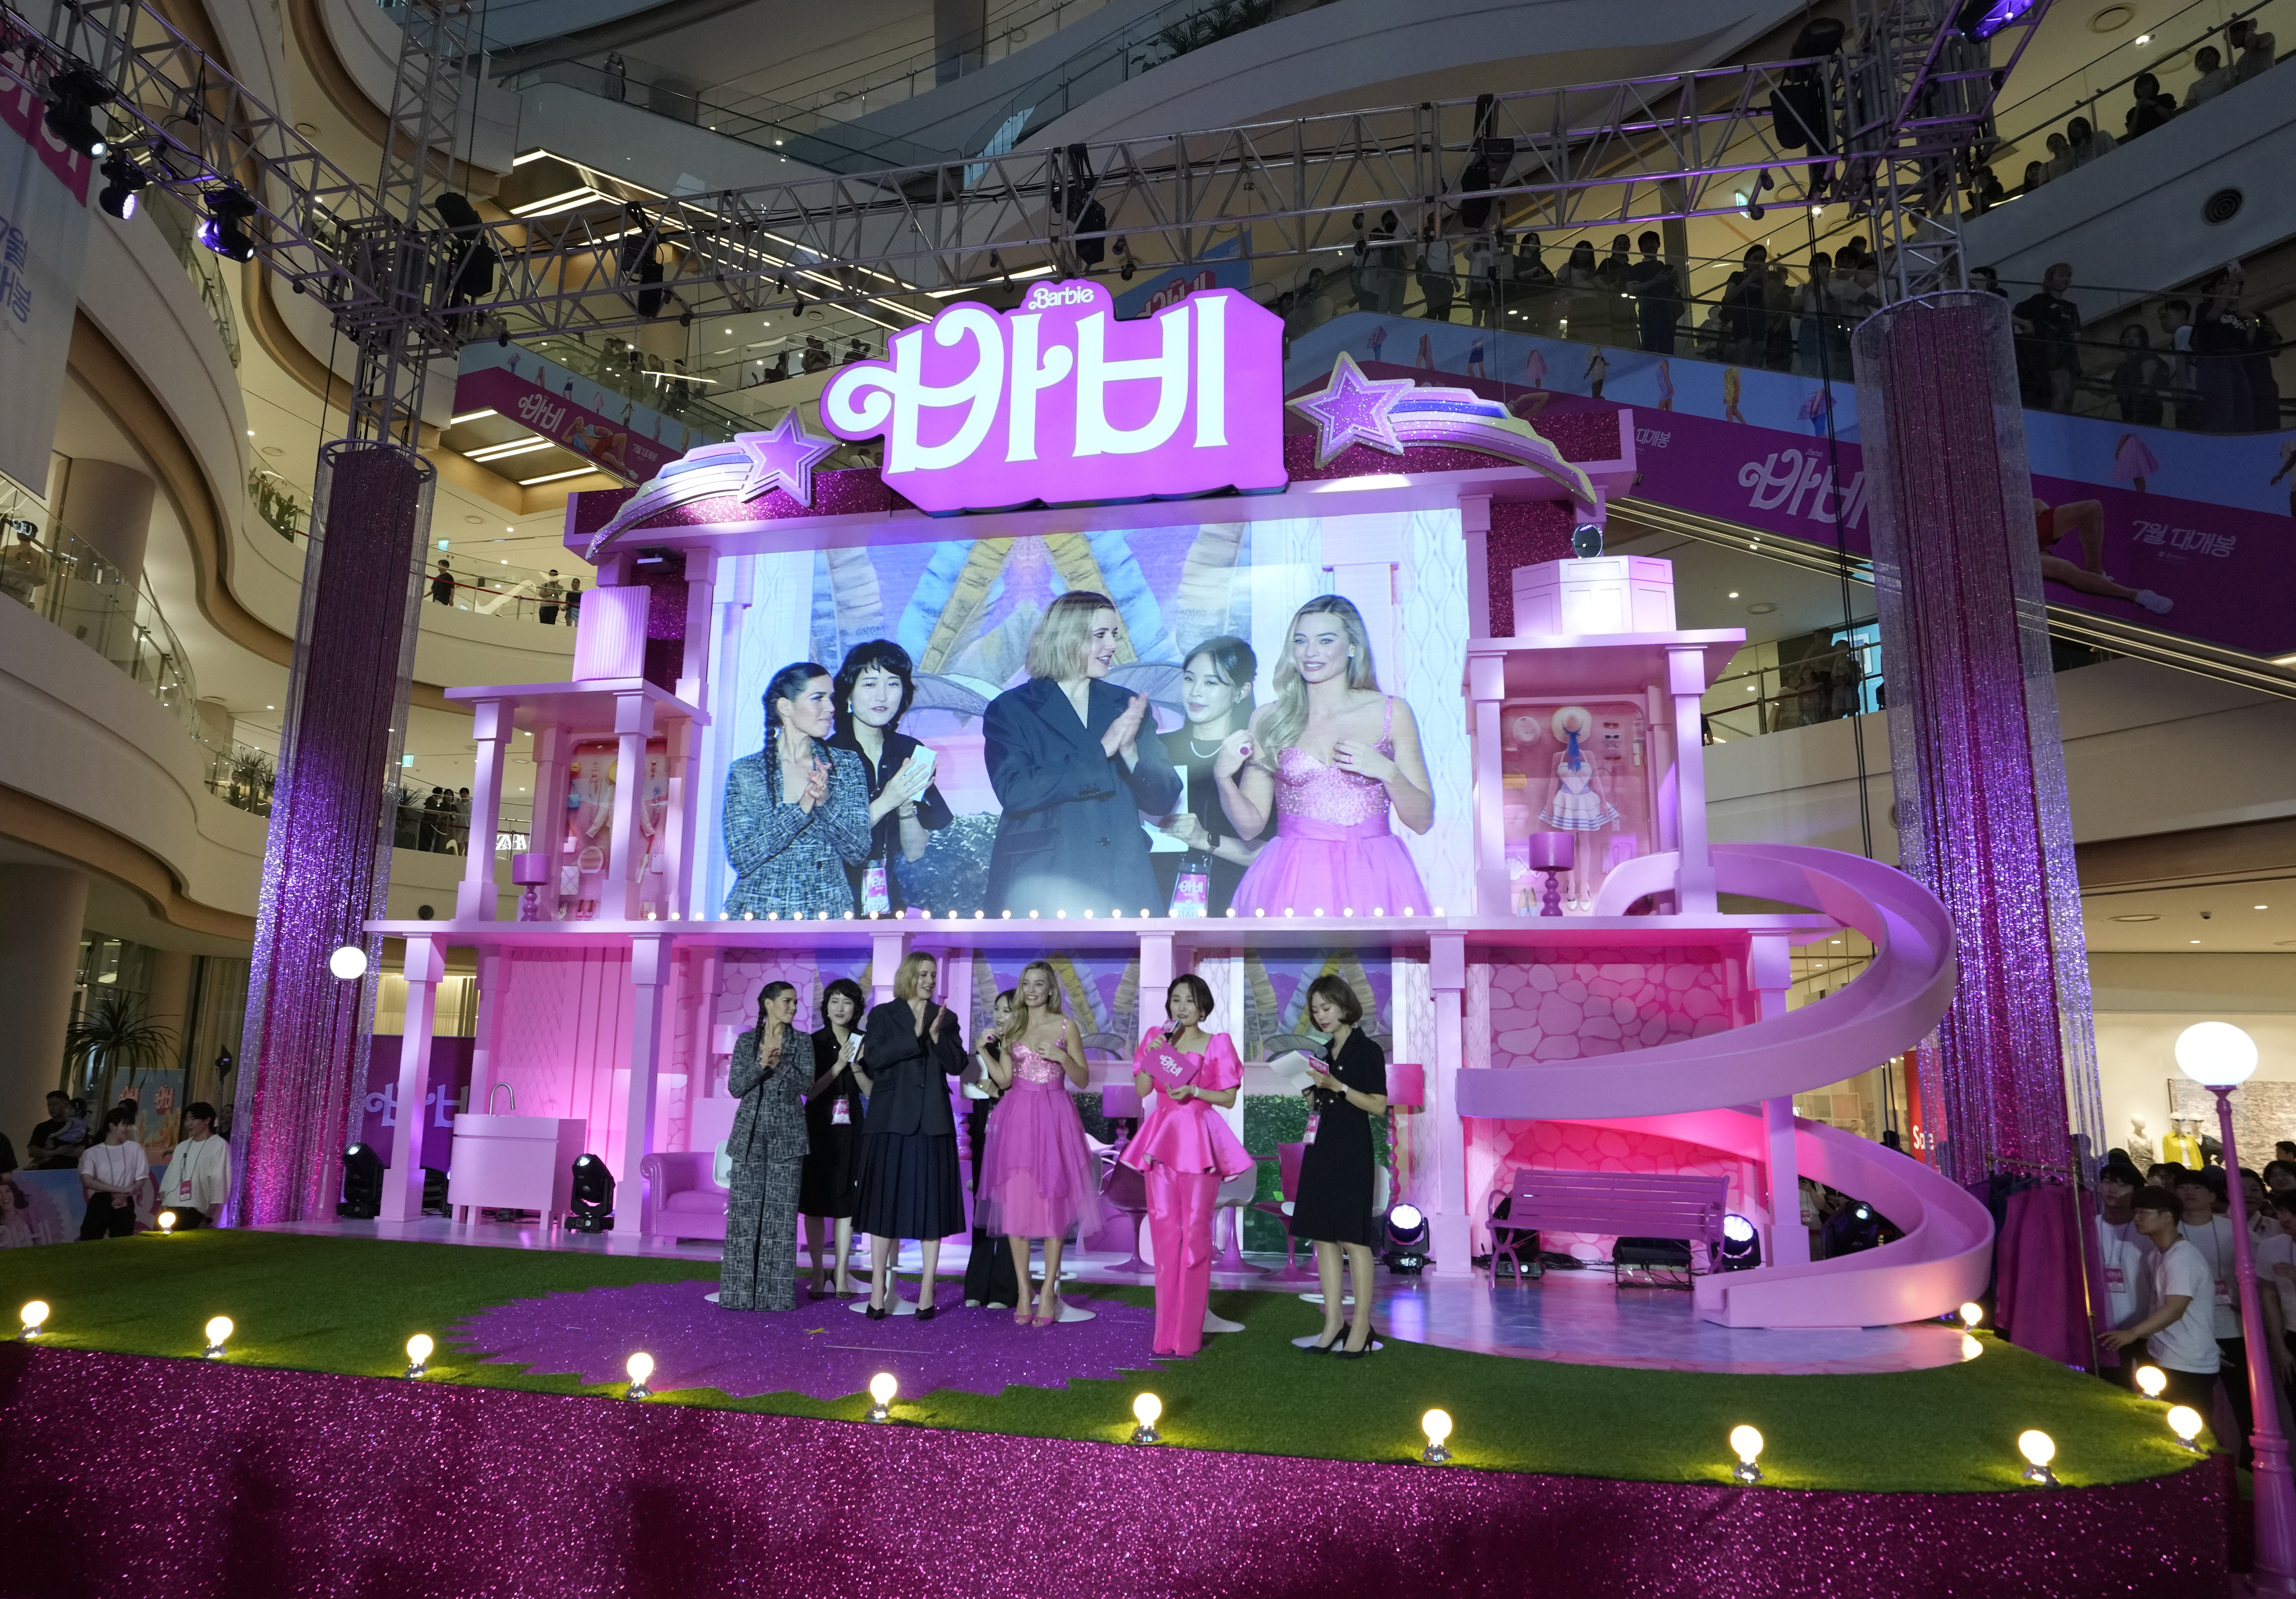 barbie fashion show mall